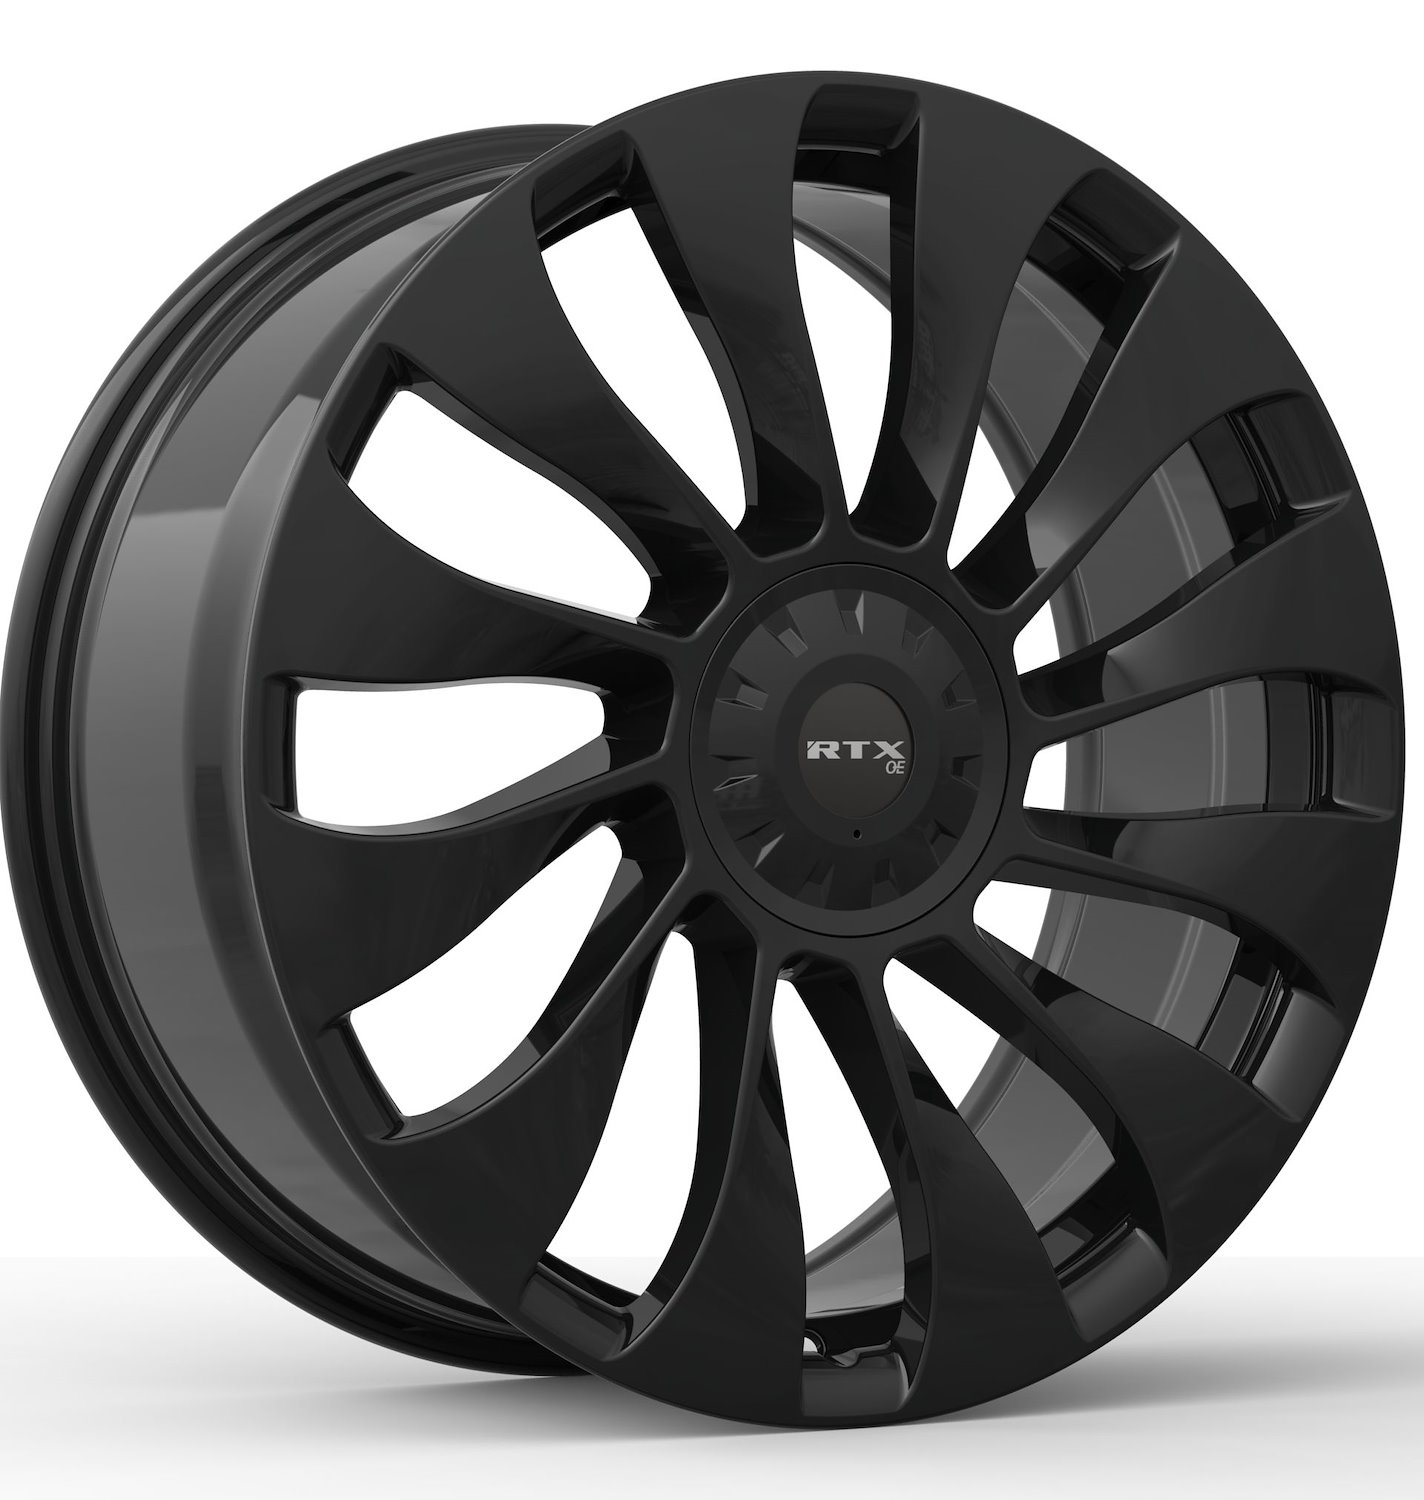 083213 OE-Series TS-02 Wheel [Size: 18" x 8.50"] Satin Black Finish